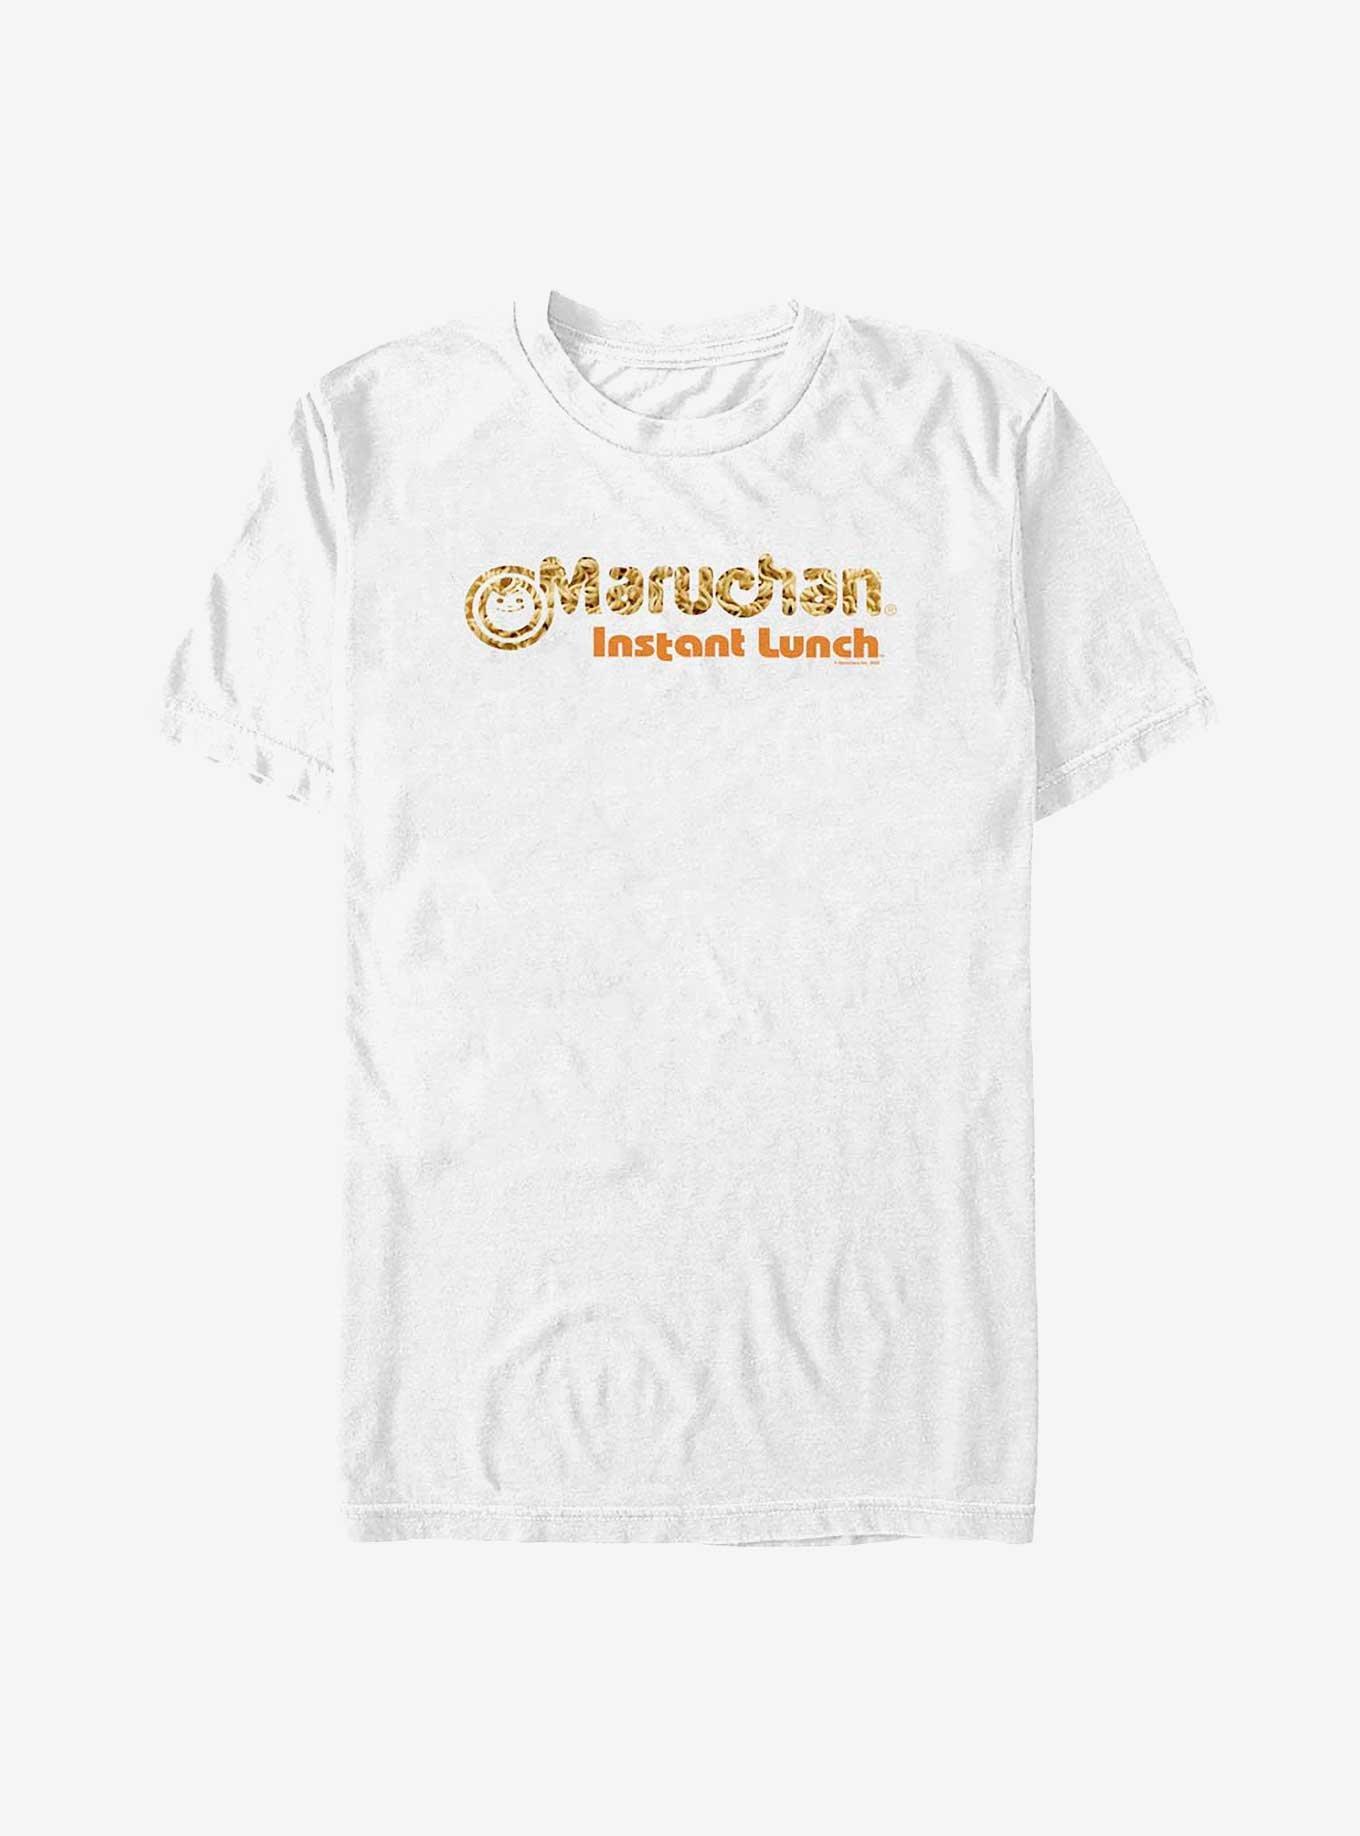 Maruchan Noodle Text T-Shirt